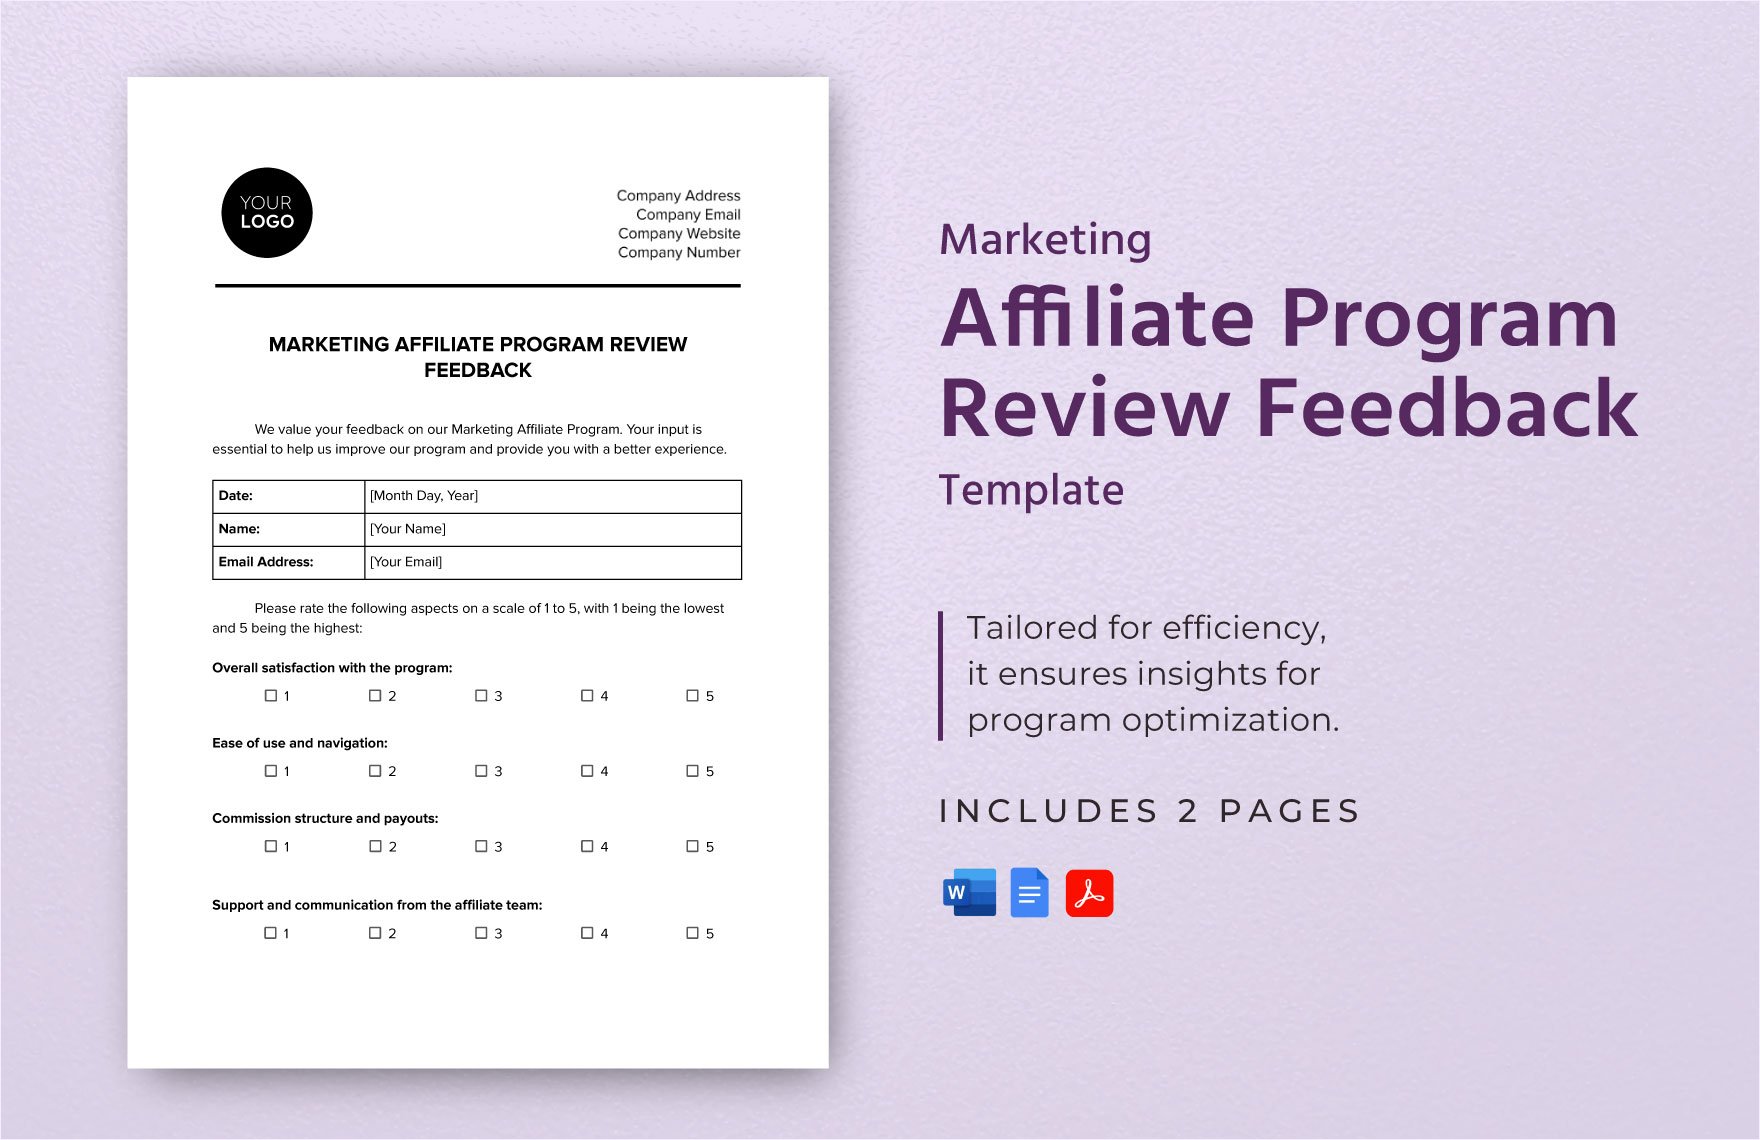 Marketing Affiliate Program Review Feedback Template